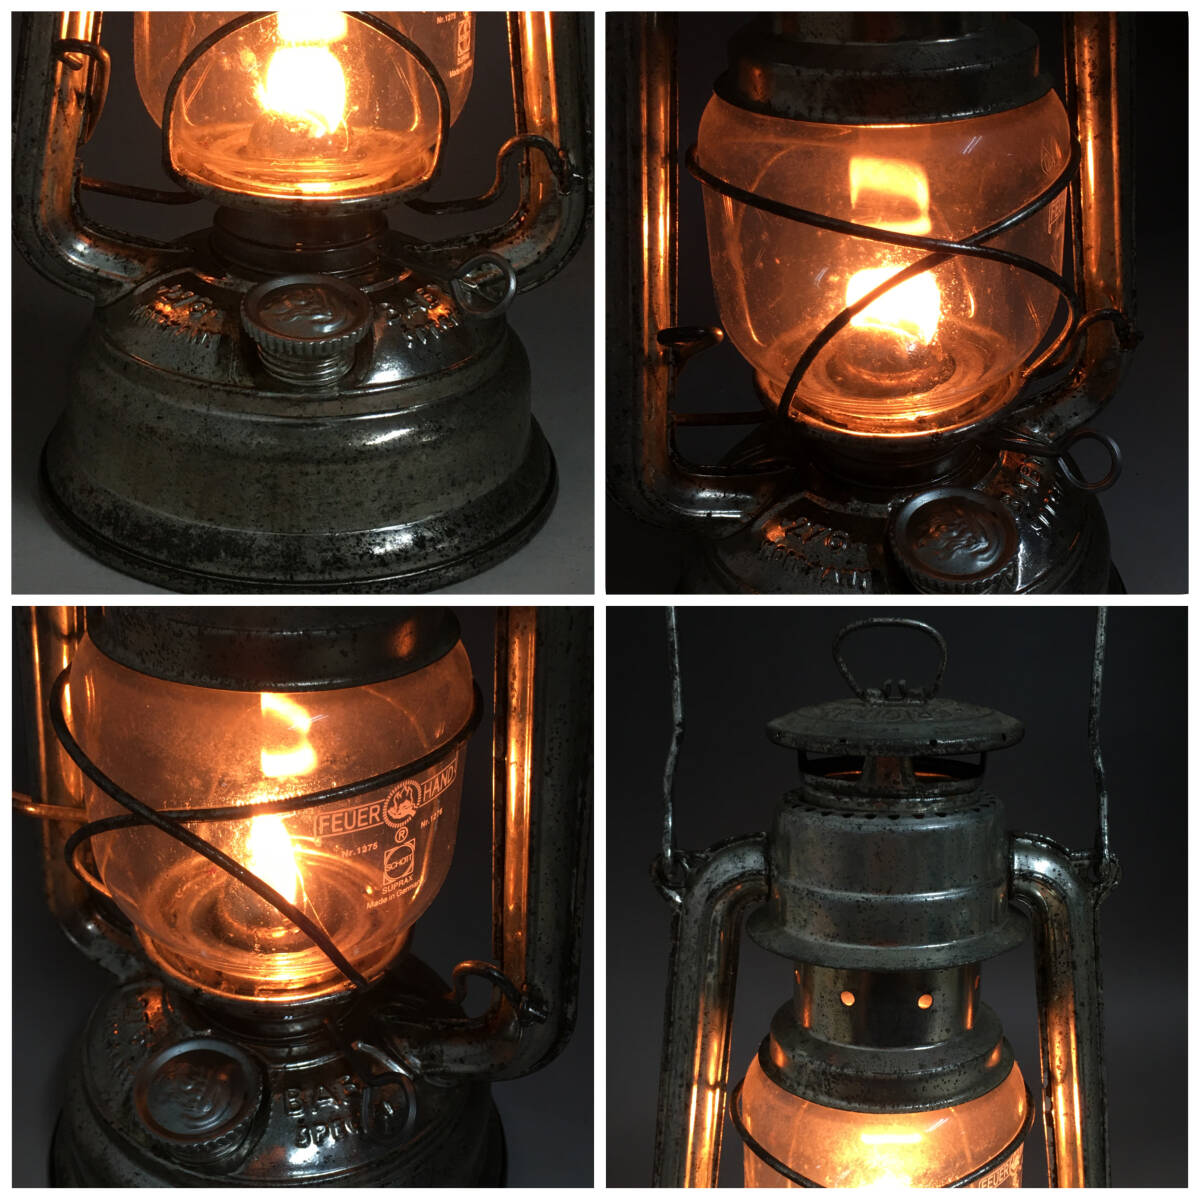 ut2/77 Vintage FEUERHAND 276 Bay Be special oil lantern w.germany made f.a hand kerosene Hurricane lantern camp 0*